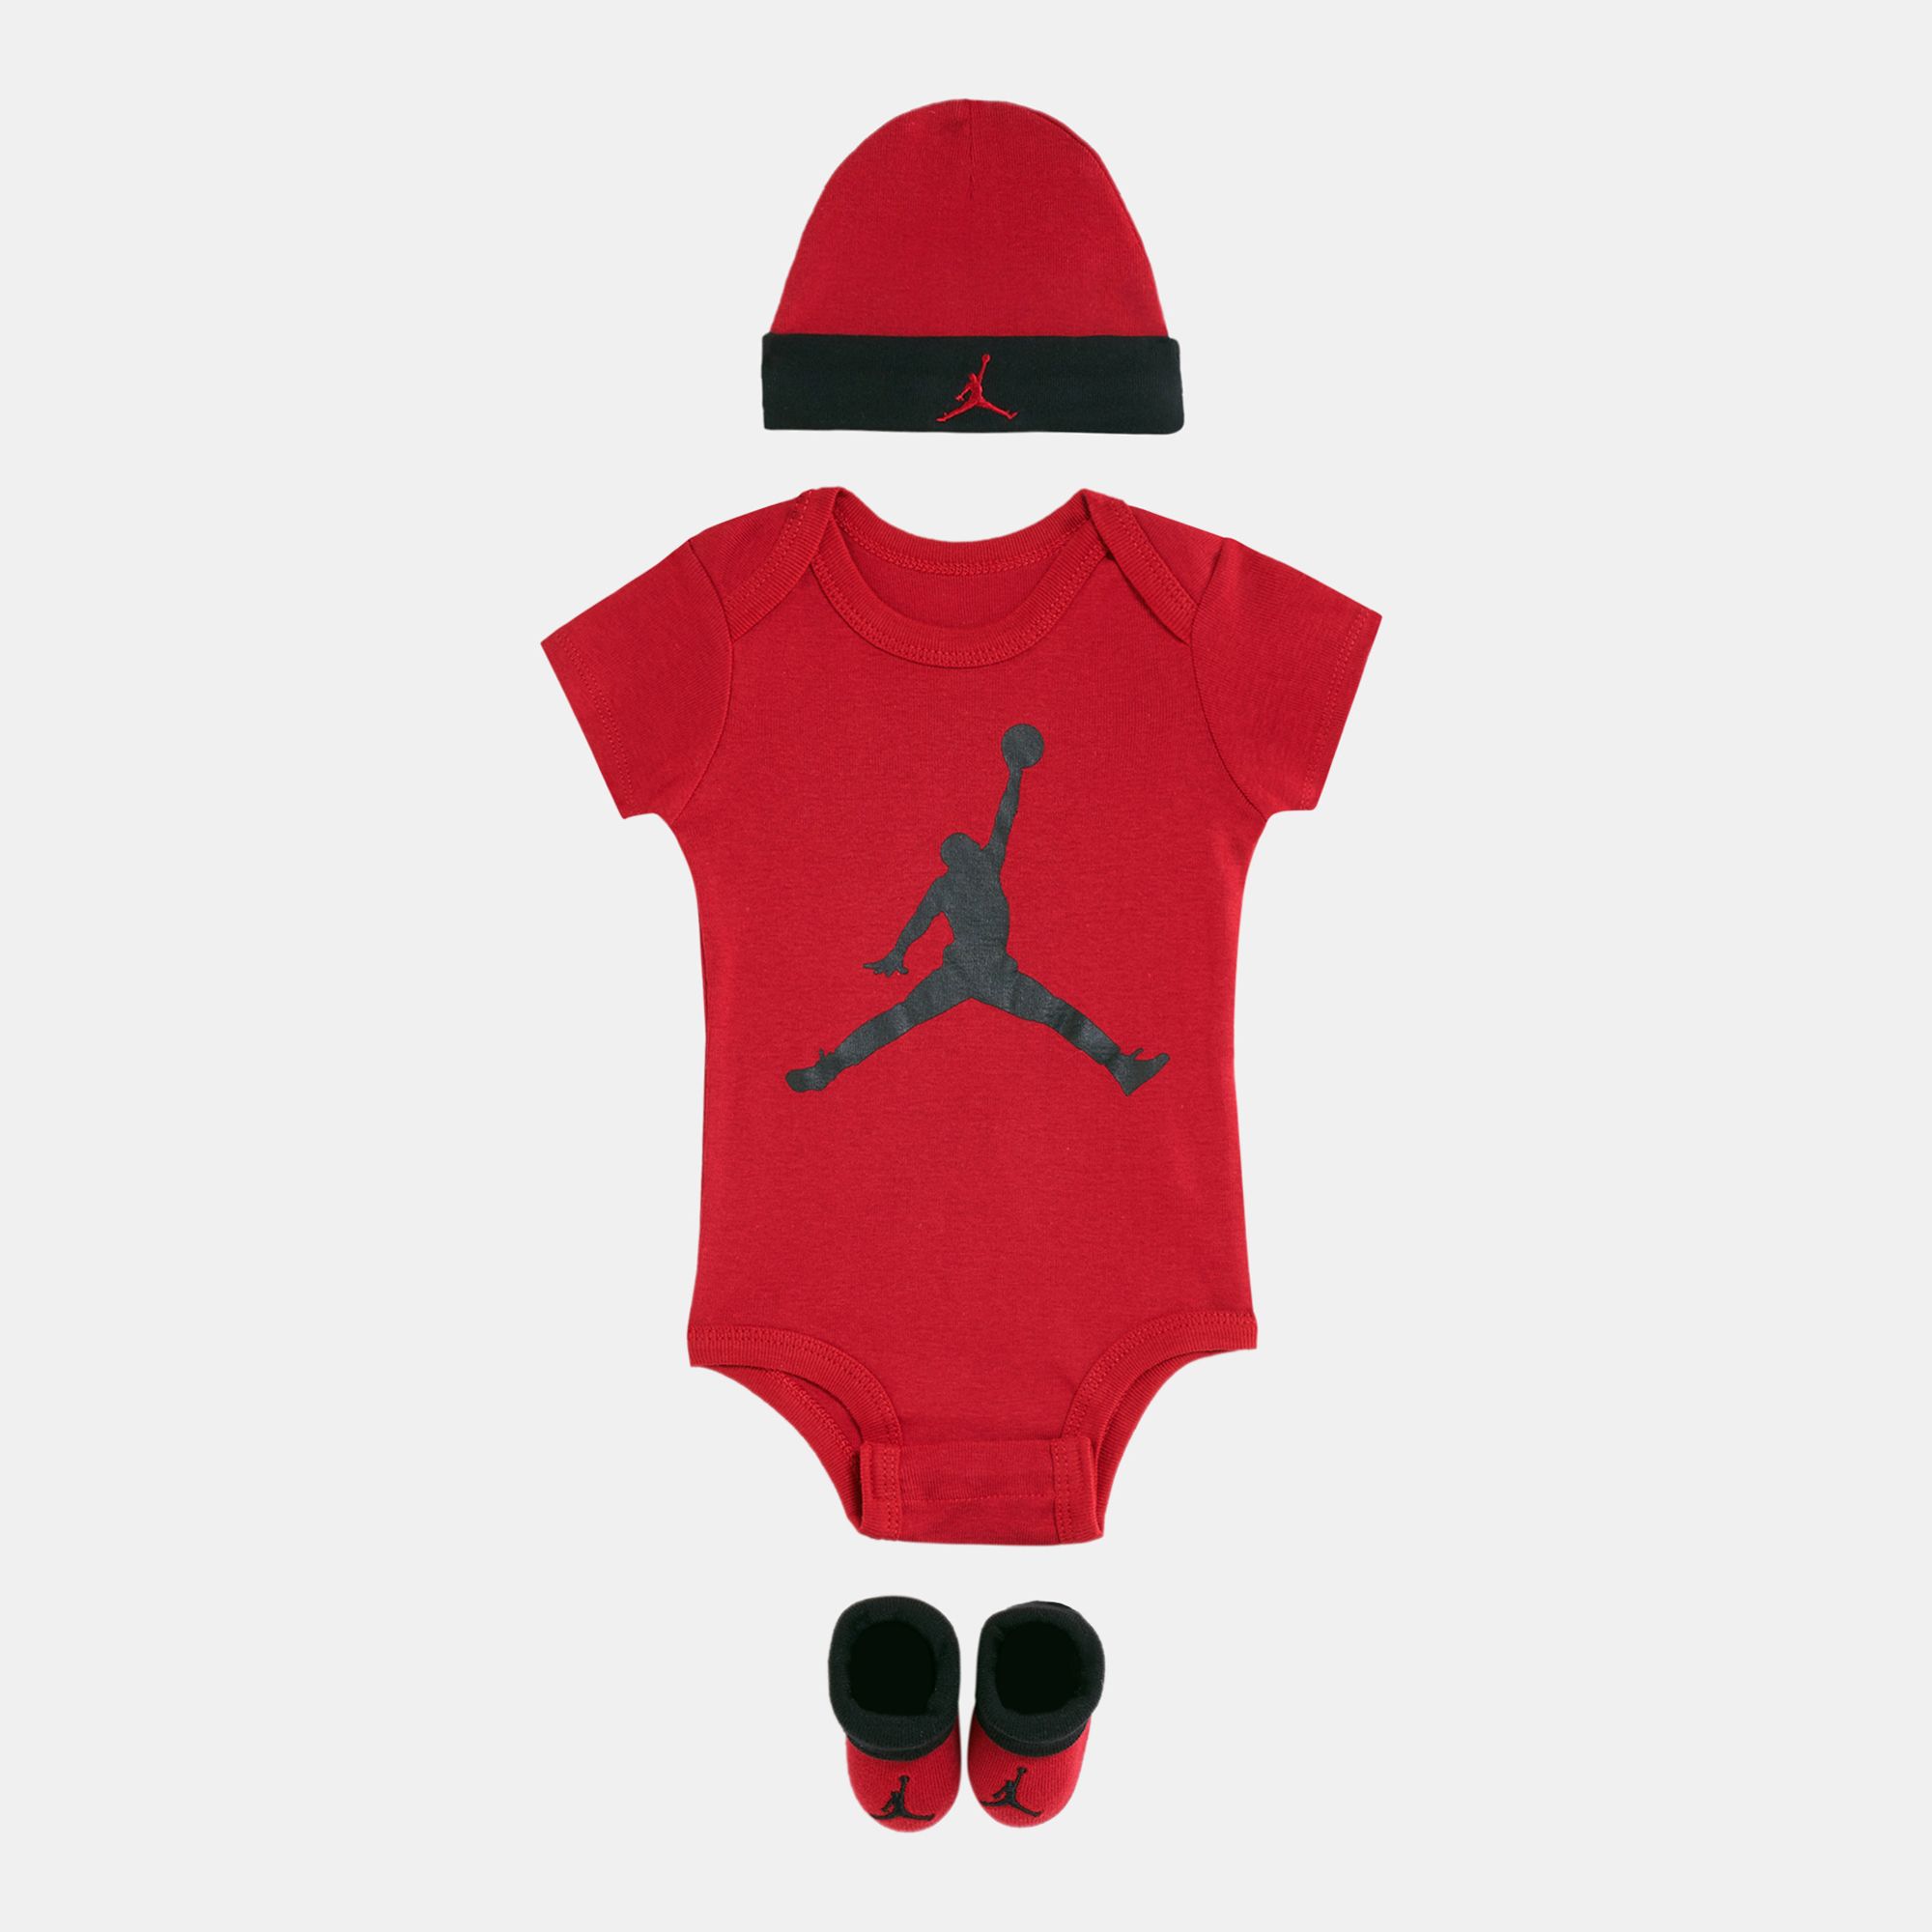 Buy Jordan Kids' Jumpman Set (Baby and Toddler) Online in Dubai, UAE | SSS